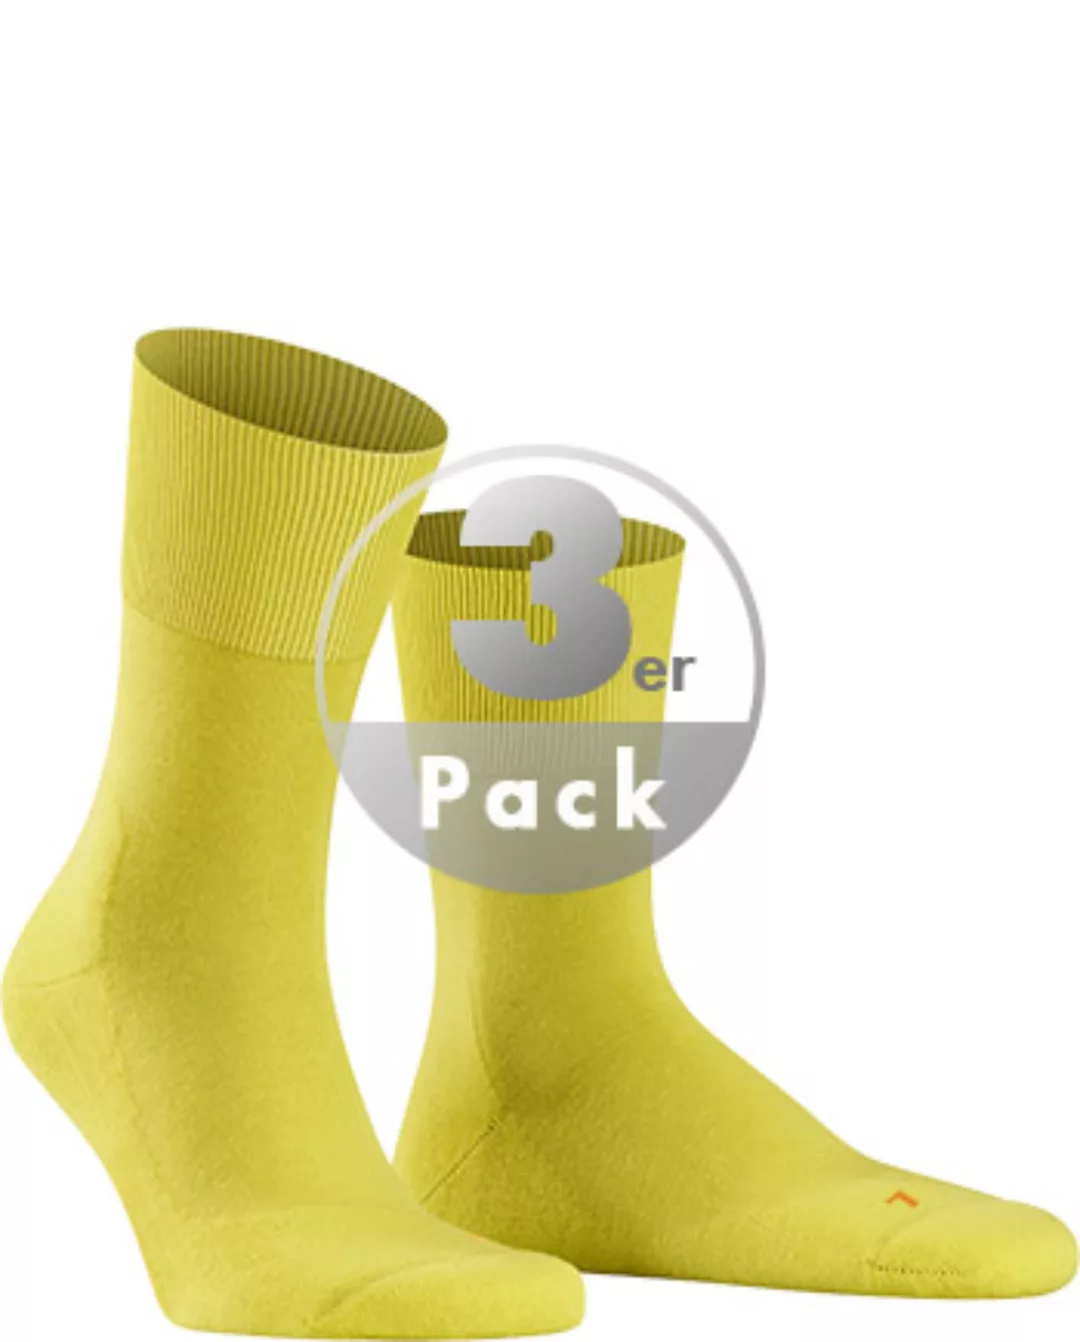 Falke Unisex Socken Run günstig online kaufen